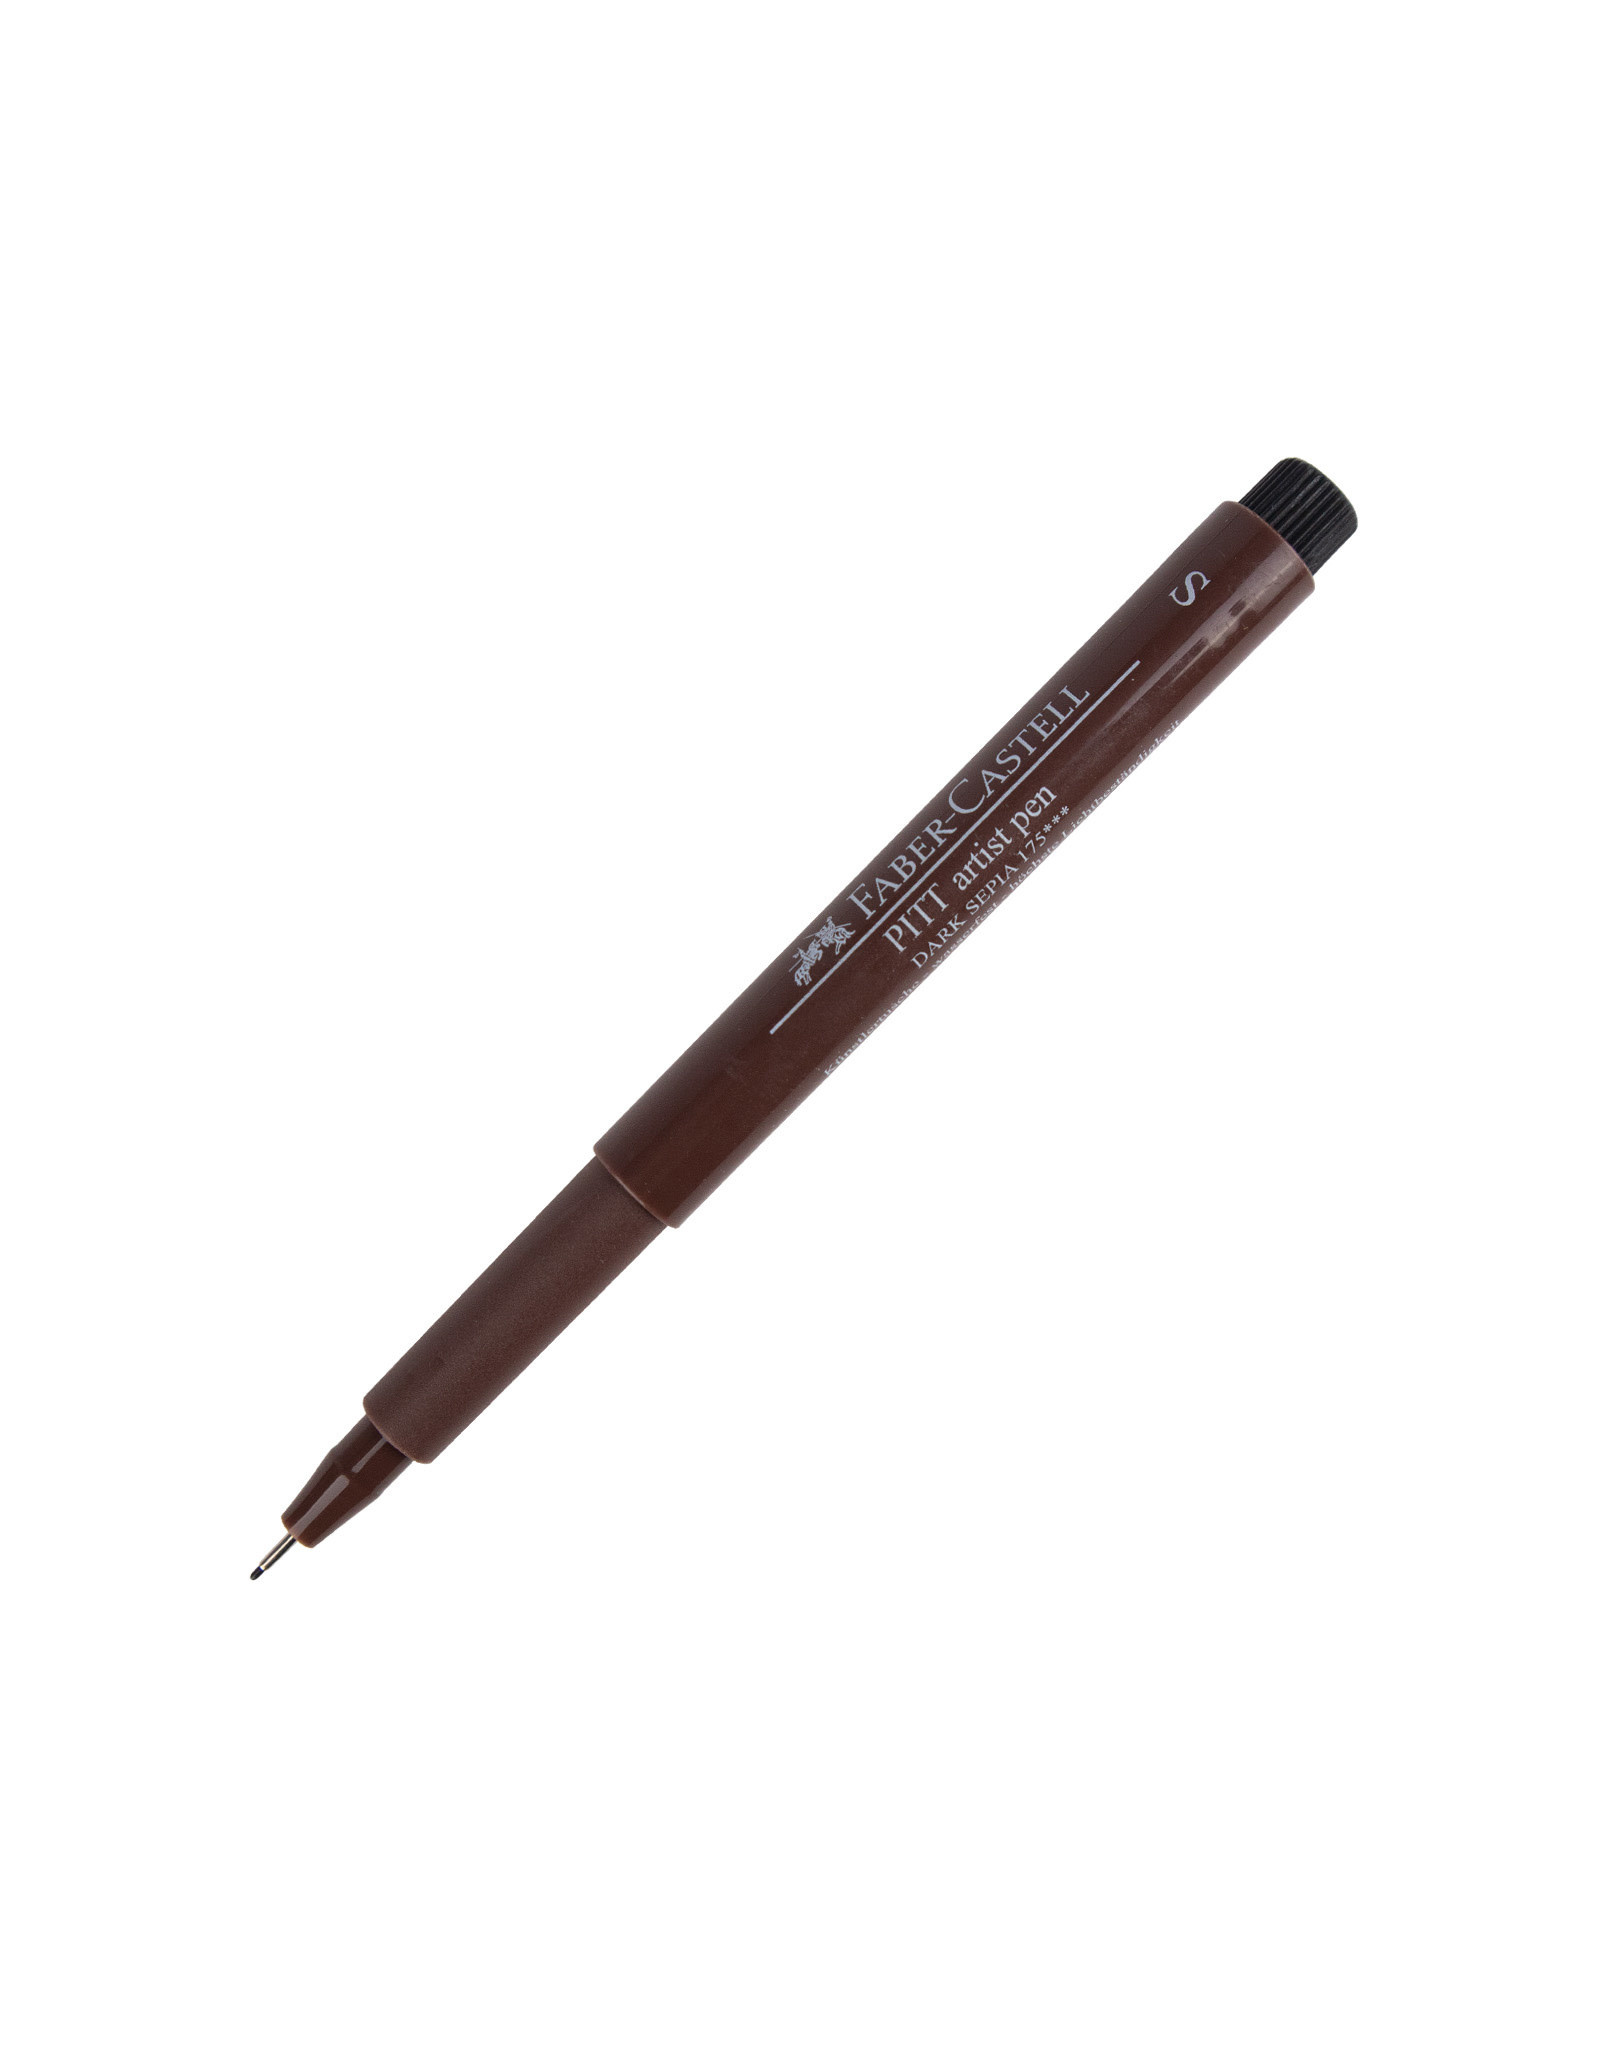 FABER-CASTELL Pitt Artist Pen, Superfine, Dark Sepia